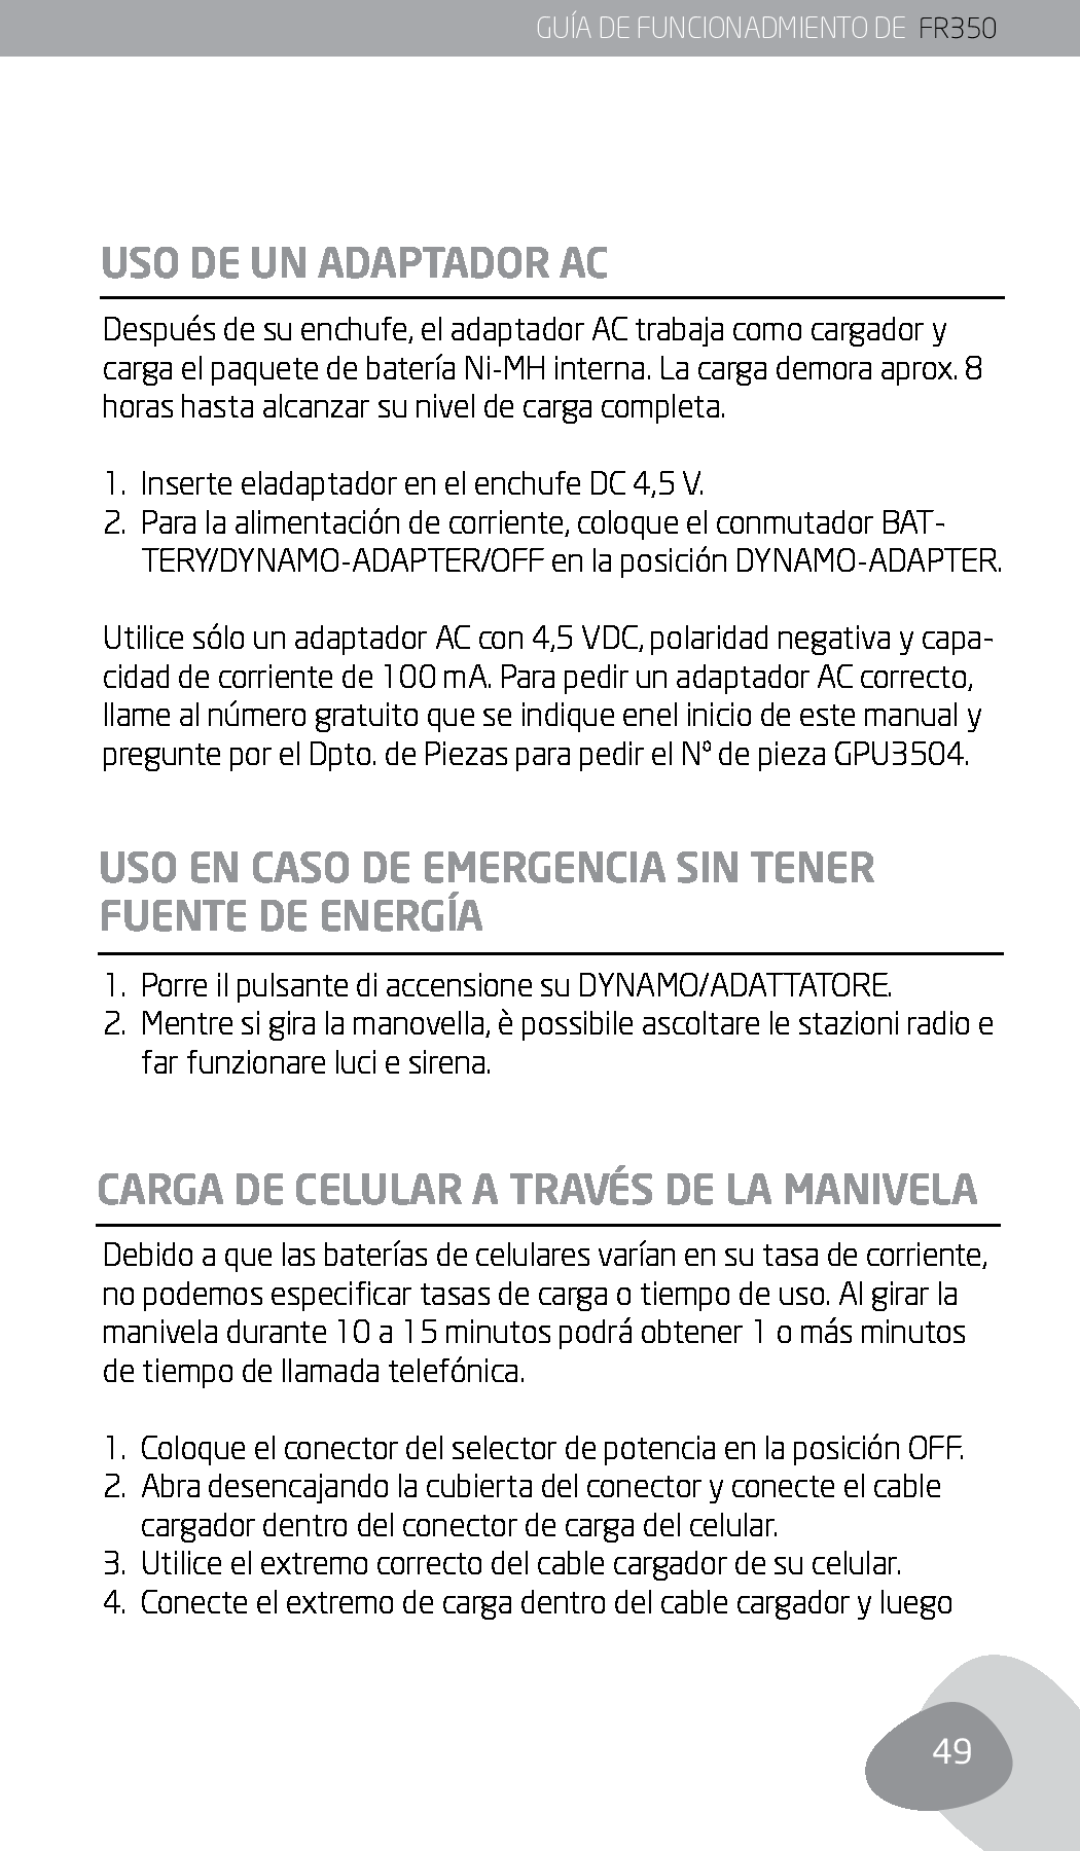 Eton FR350 owner manual Uso De Un Adaptador Ac, Carga De Celular A Través De La Manivela 